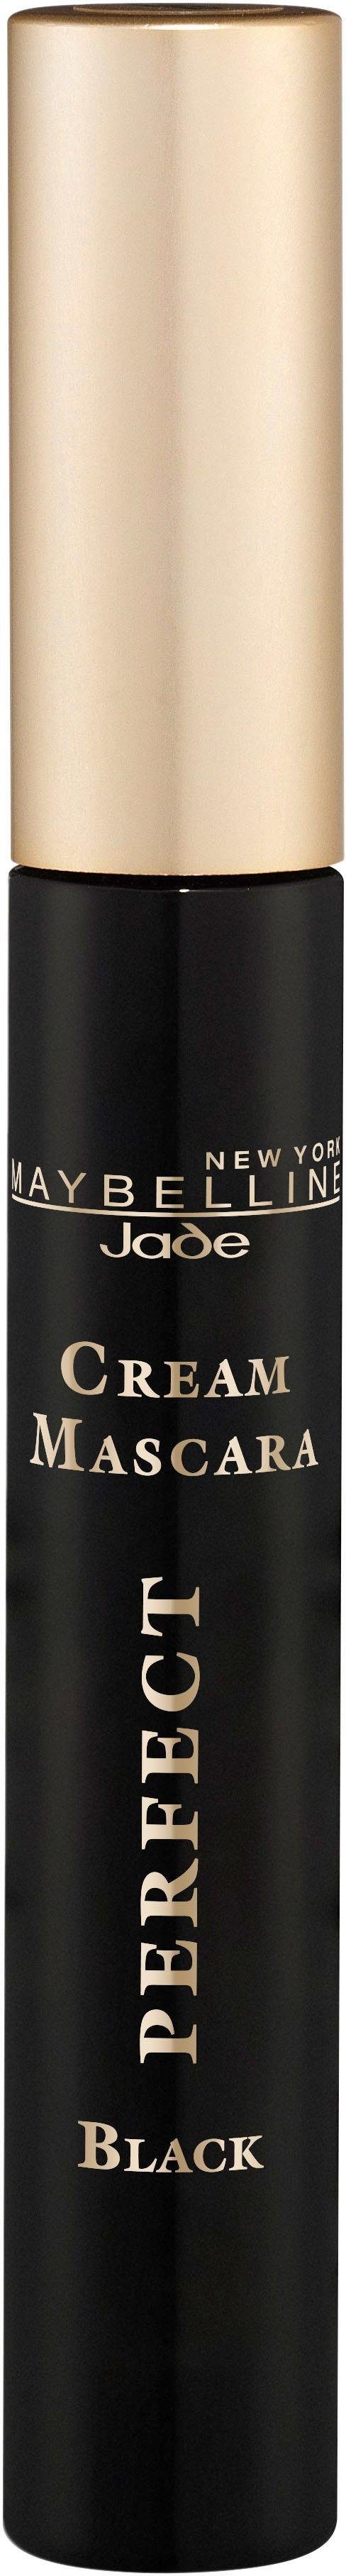 Mit YORK Cream NEW pflegendem MAYBELLINE Protein Mascara, Mascara